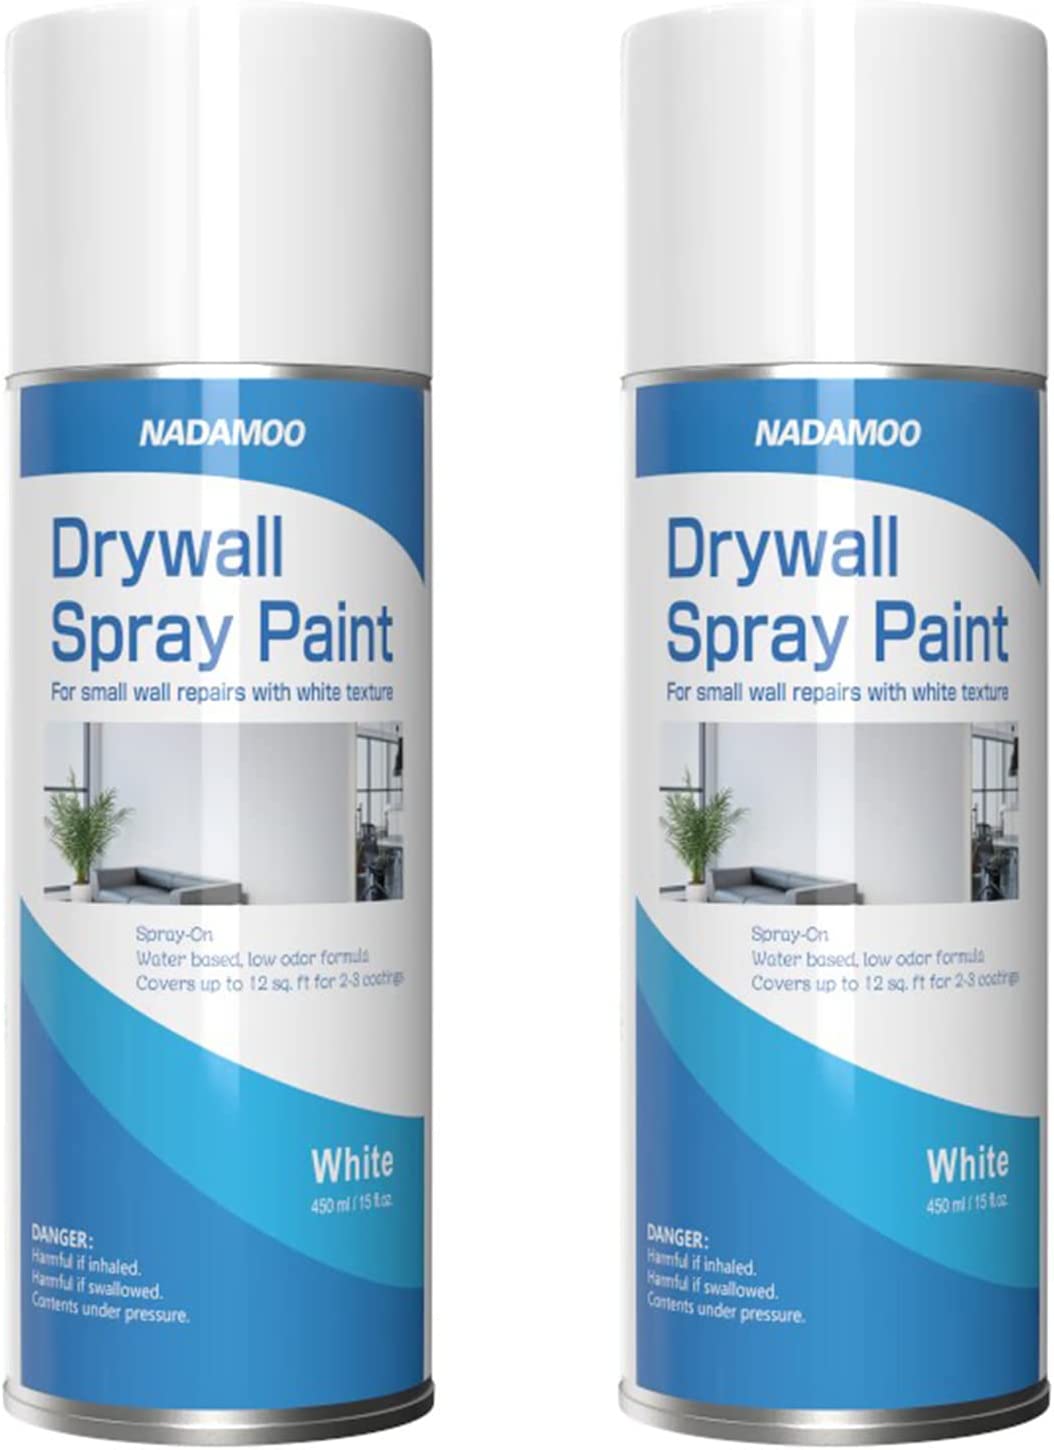 NADAMOO Drywall Spray Paint White Aerosol, Water-based [...]